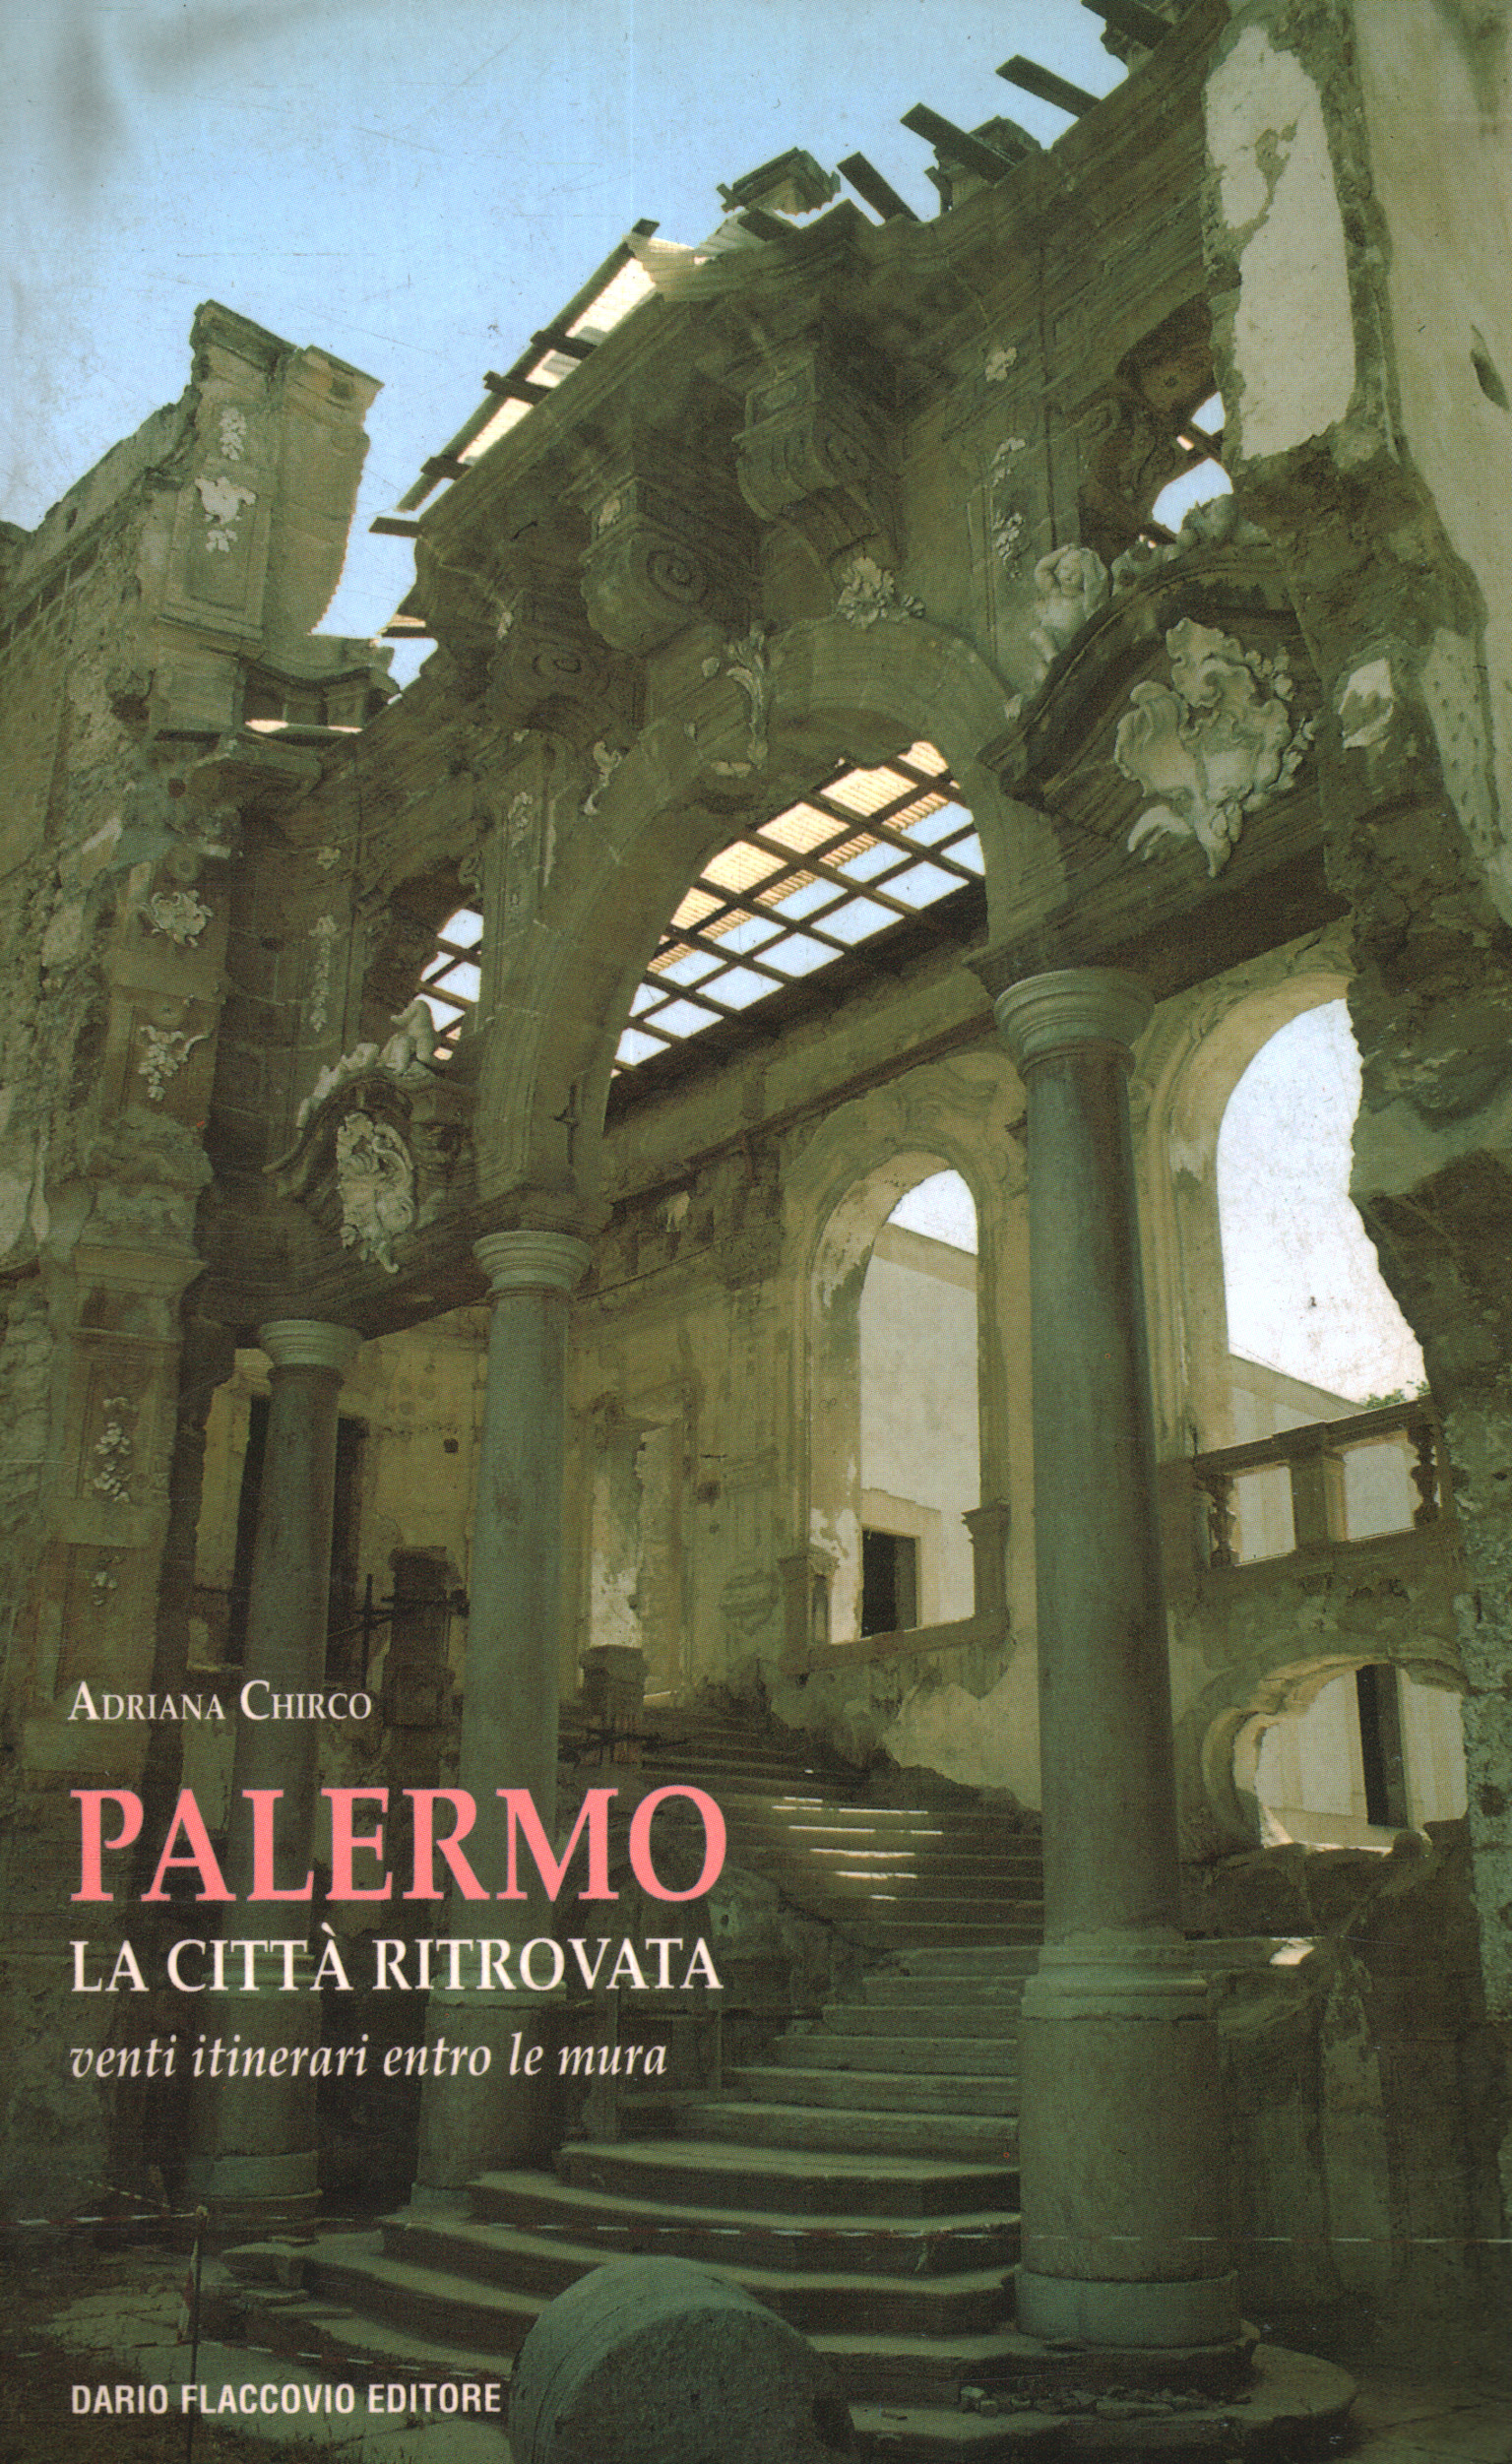 Palermo. The city found